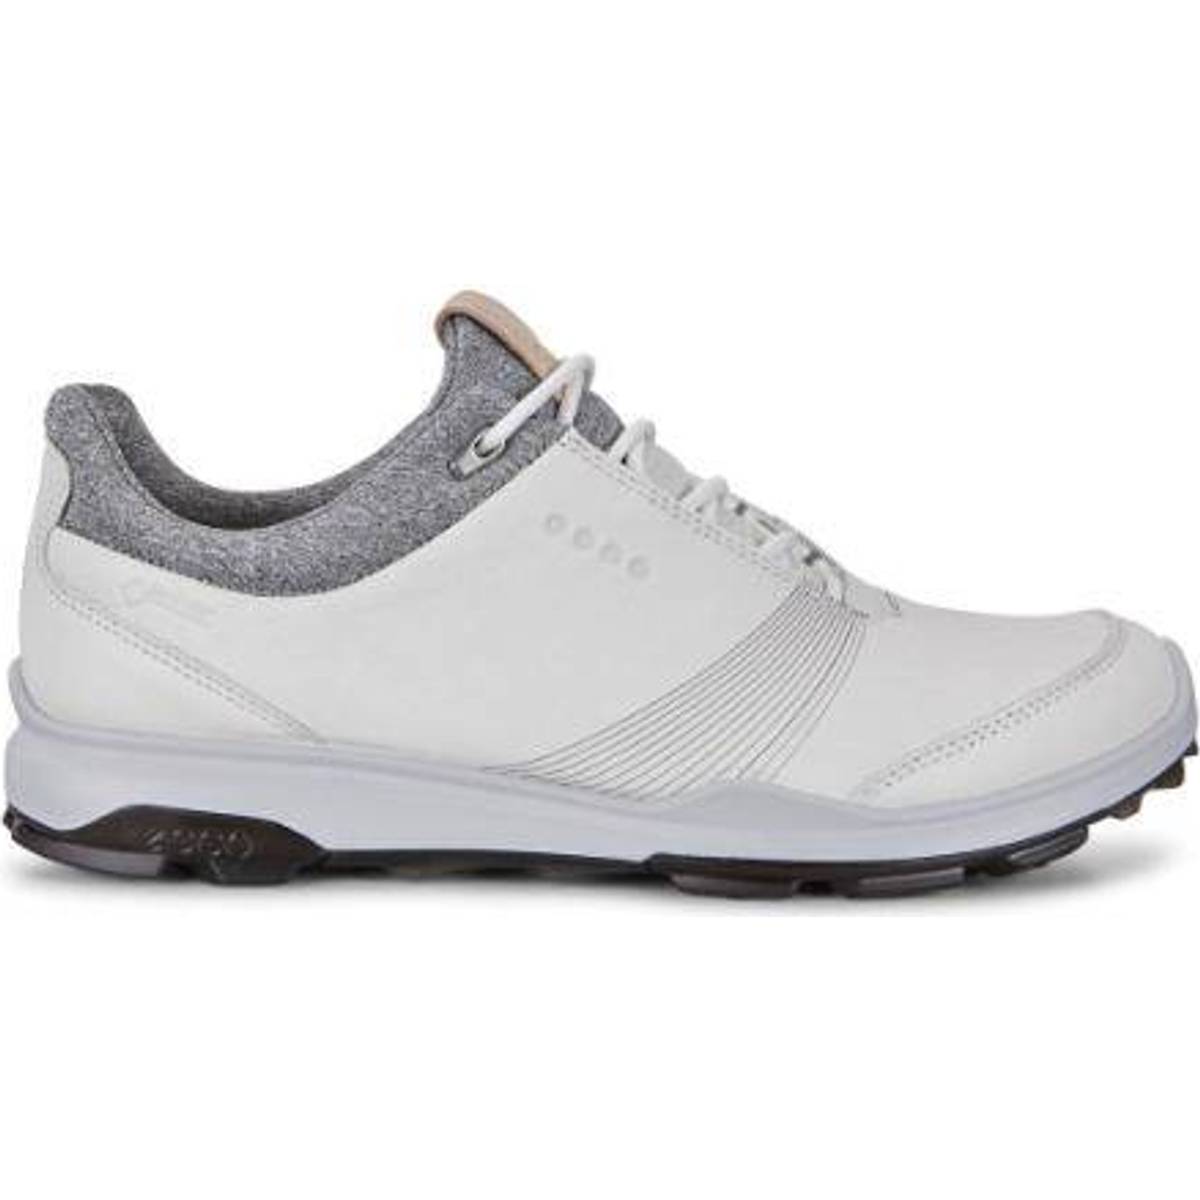 ecco spiked golf sko inexpensive 90e06 65628